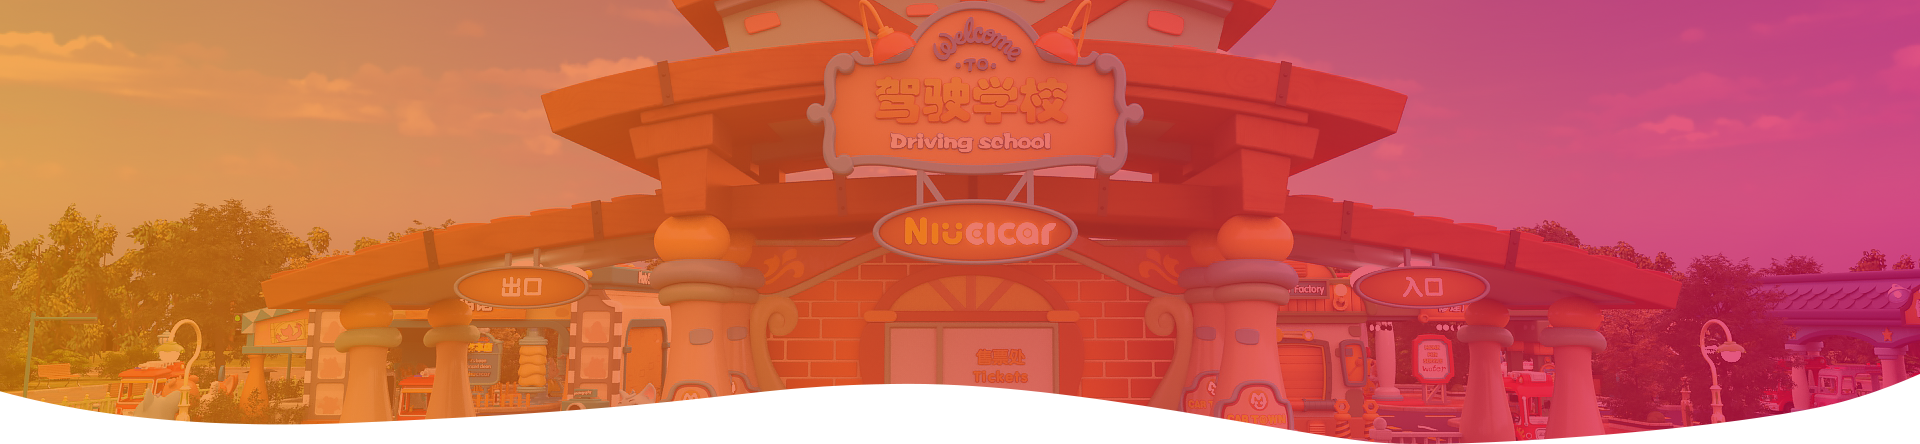 Ningbo Fantawild Adventure Forest Driving School